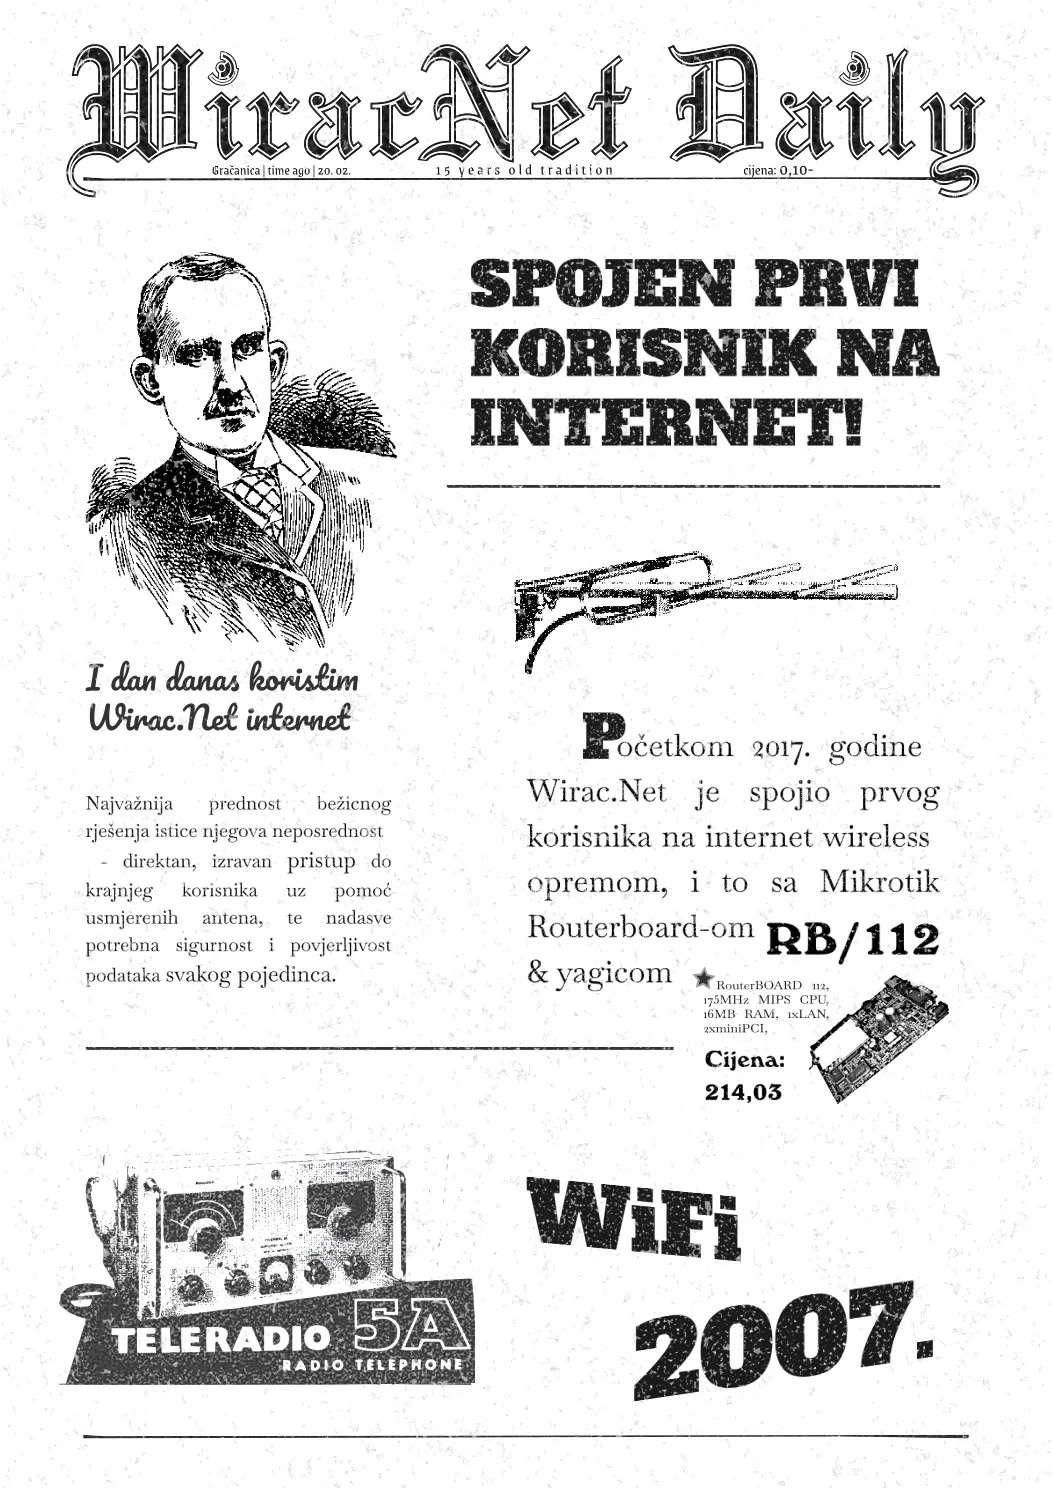 Spojen prvi korisnik na WiFi internet, 2007.